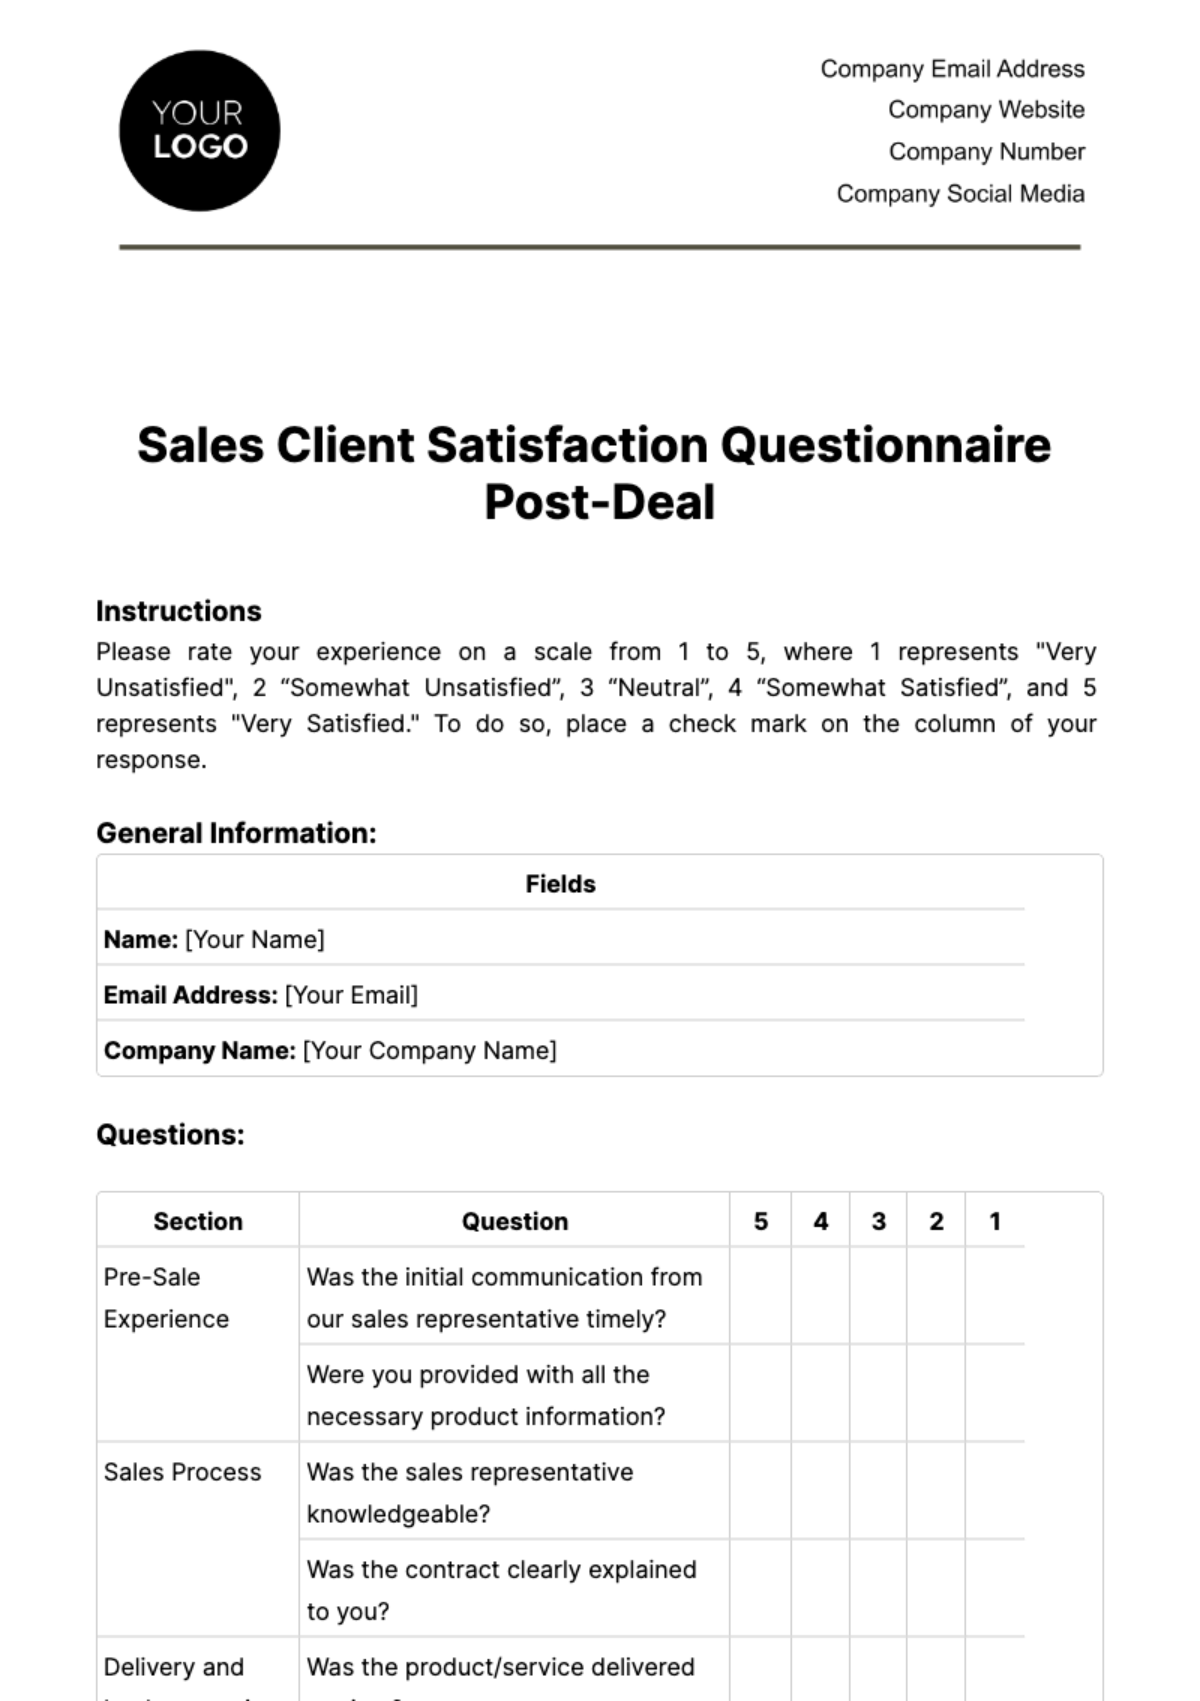 Free Sales Client Satisfaction Questionnaire Post-Deal Template